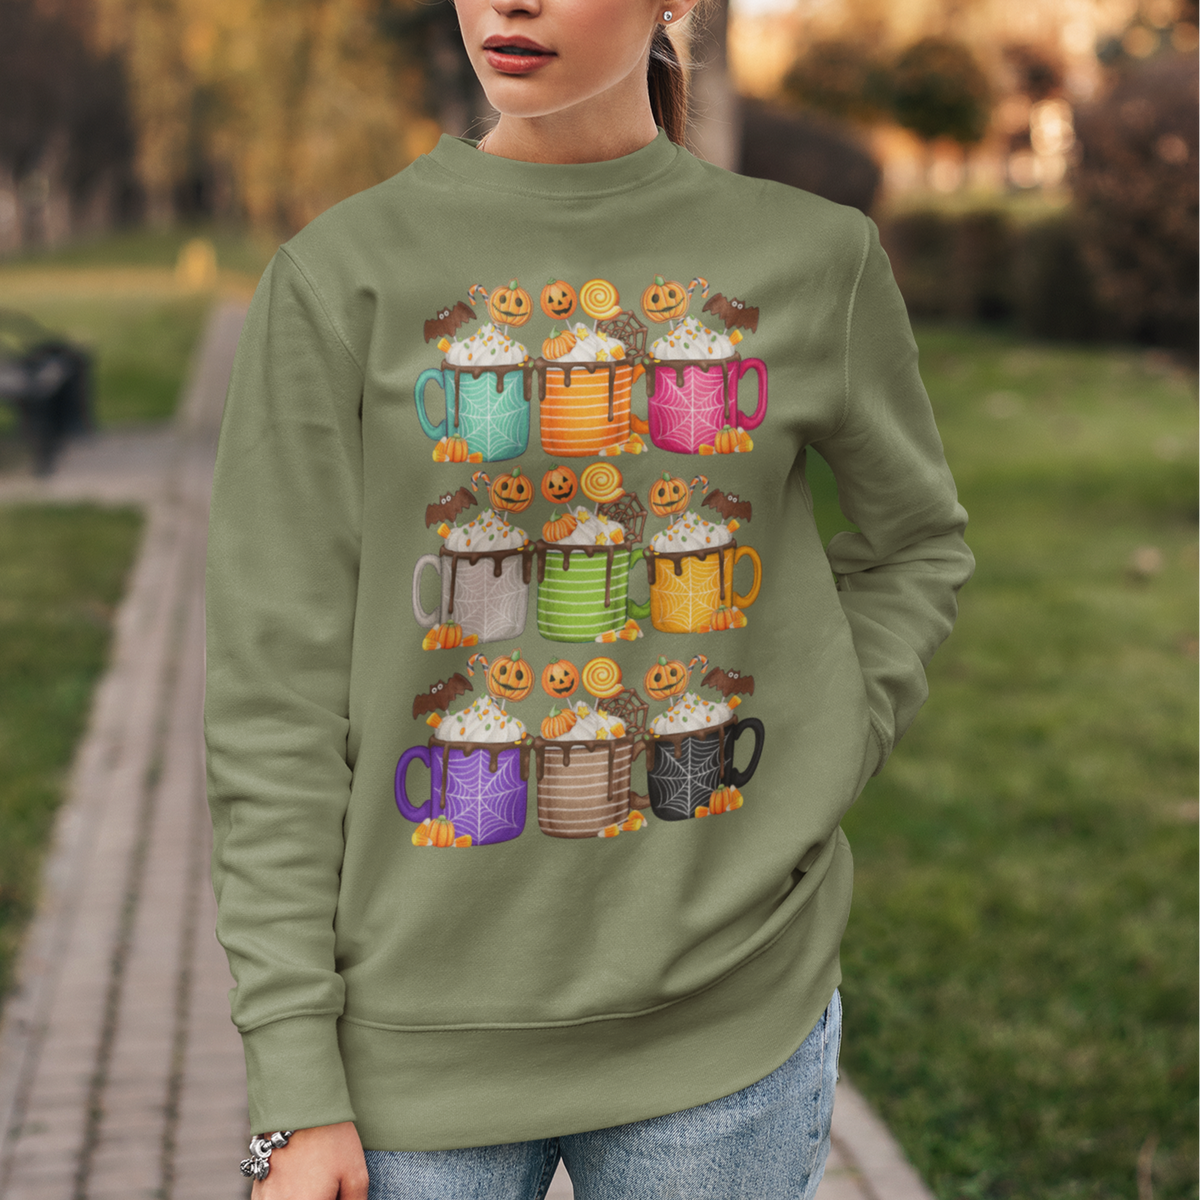 Fall Coffee T-Shirt, Hot Coffee tshirt, Coffee Lovers, Cute Fall Tee, Pumpkin Latte Drinks, Halloween Shirt, Fall Coffee Shirt, Tis' The Season, Cute Fall T-Shirt, pumpkin spice tee, fall shirt, pumpkin spice tester